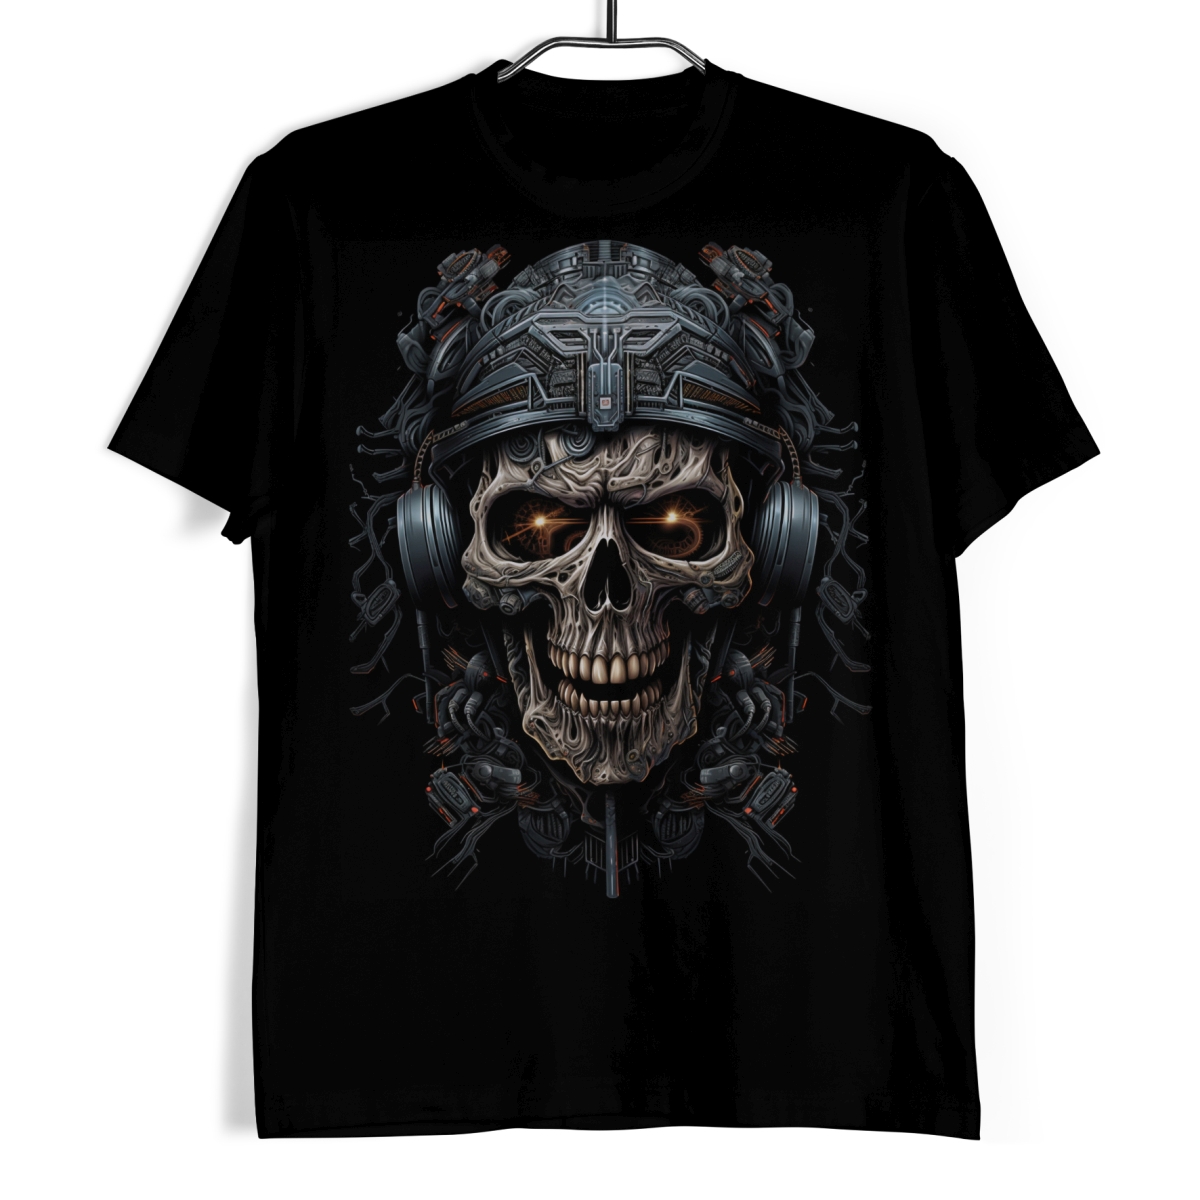 Tričko s lebkou - Cyber Skull Warrior S